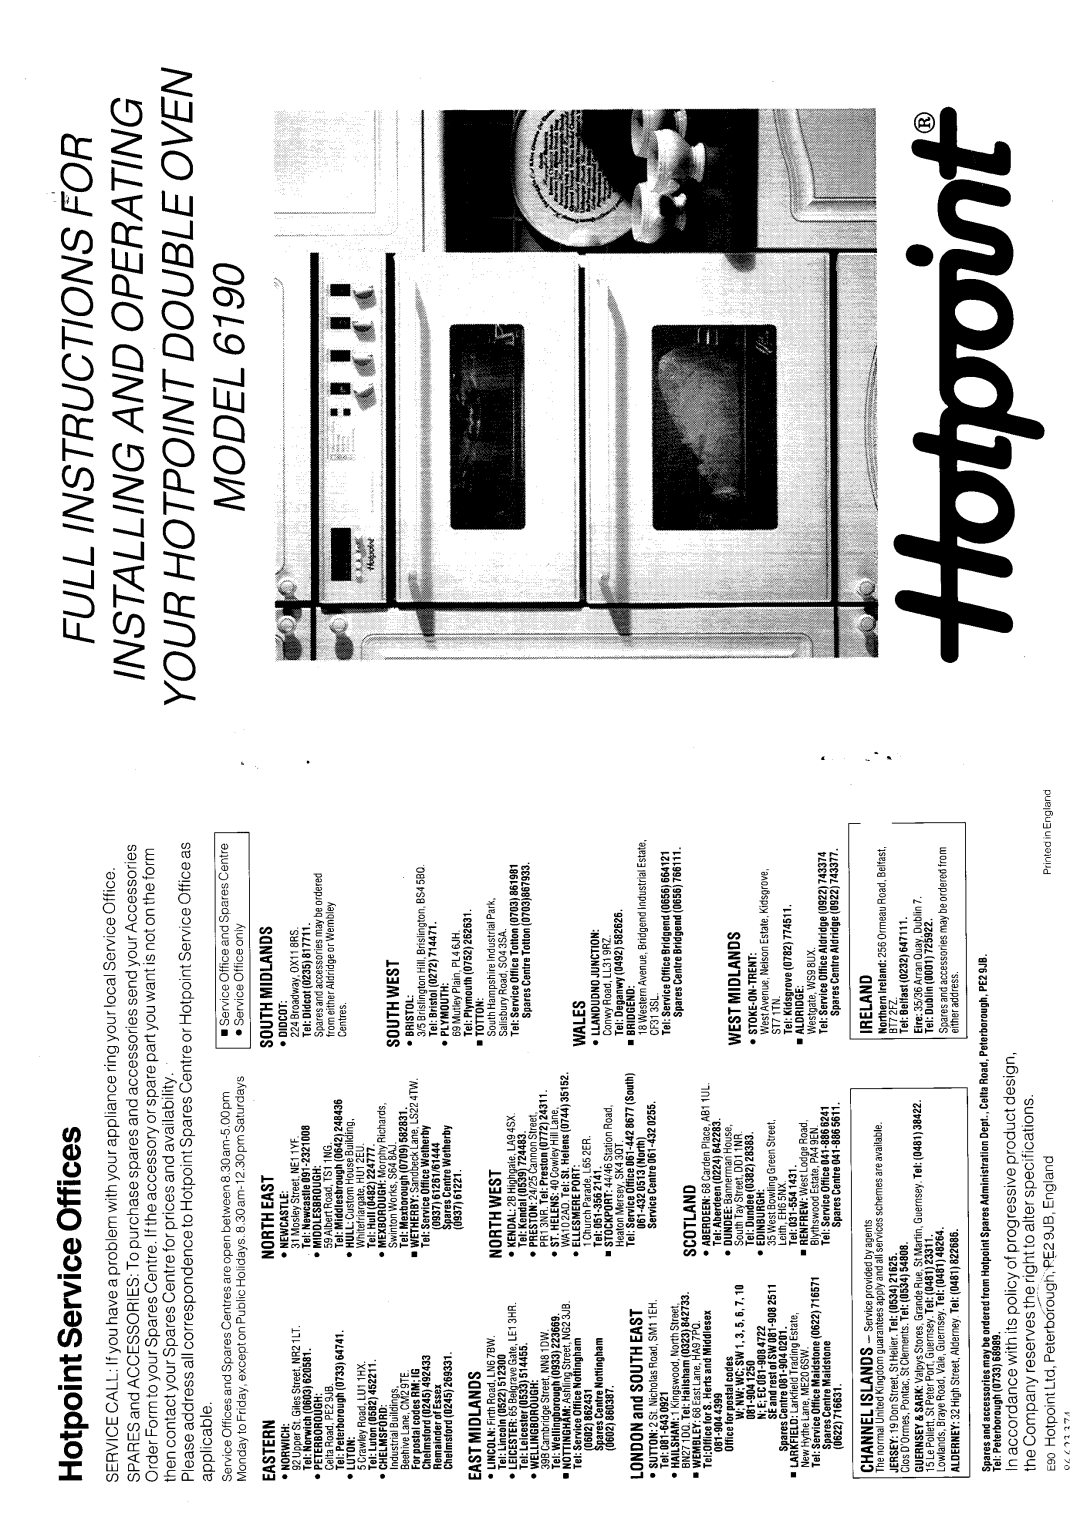 Hotpoint 6190 manual 